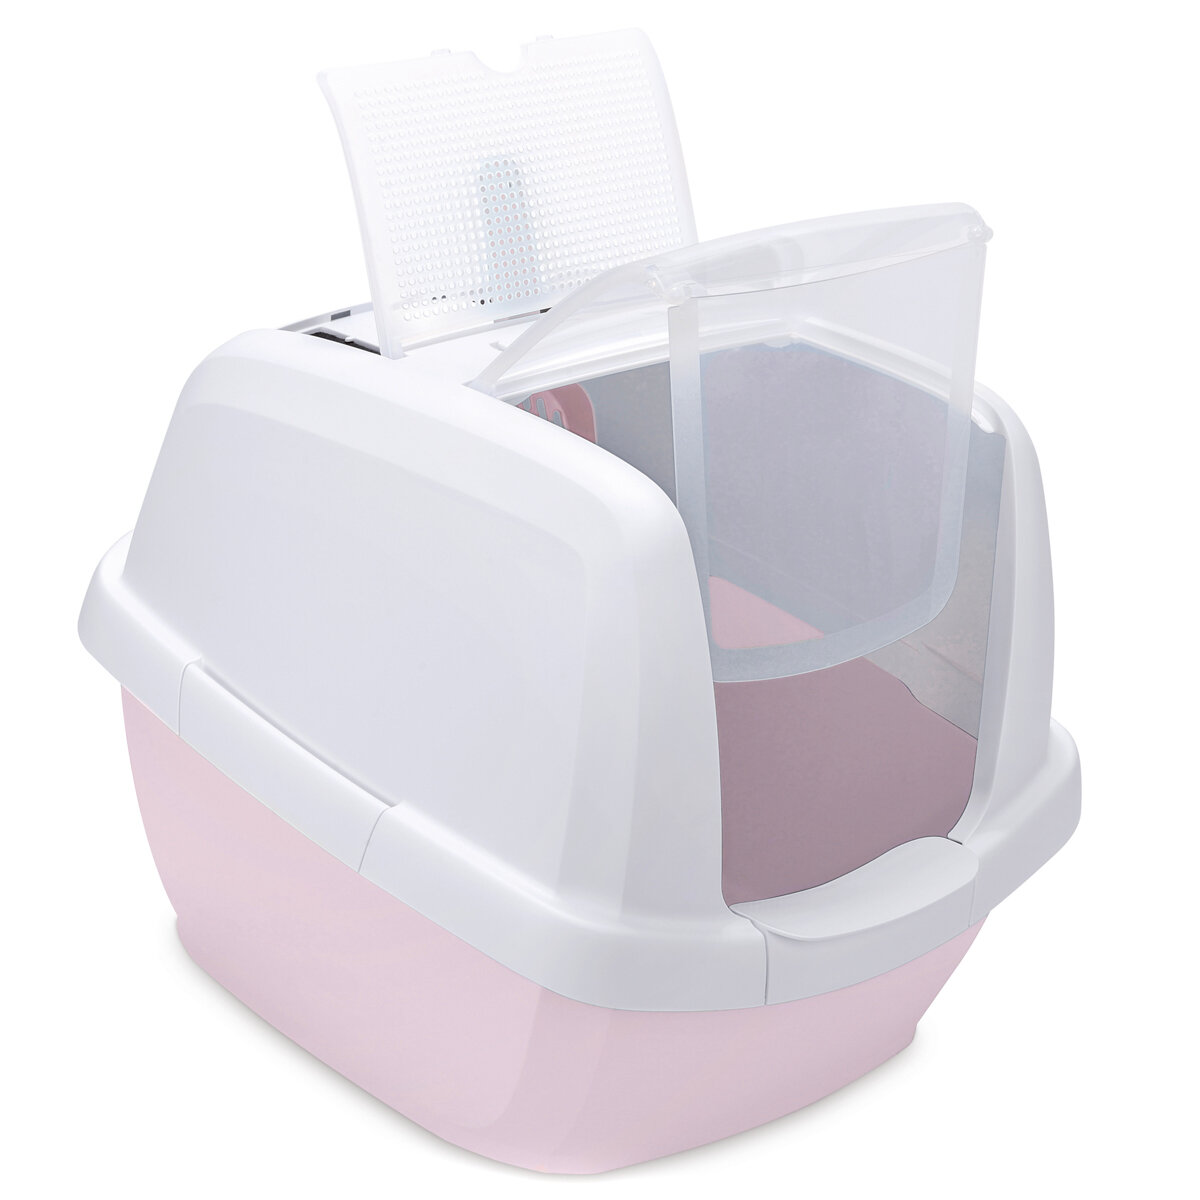 Закрытый био-туалет для кошек IMAC Maddy, белый/нежно-розовый, 62х49,5х47,5см